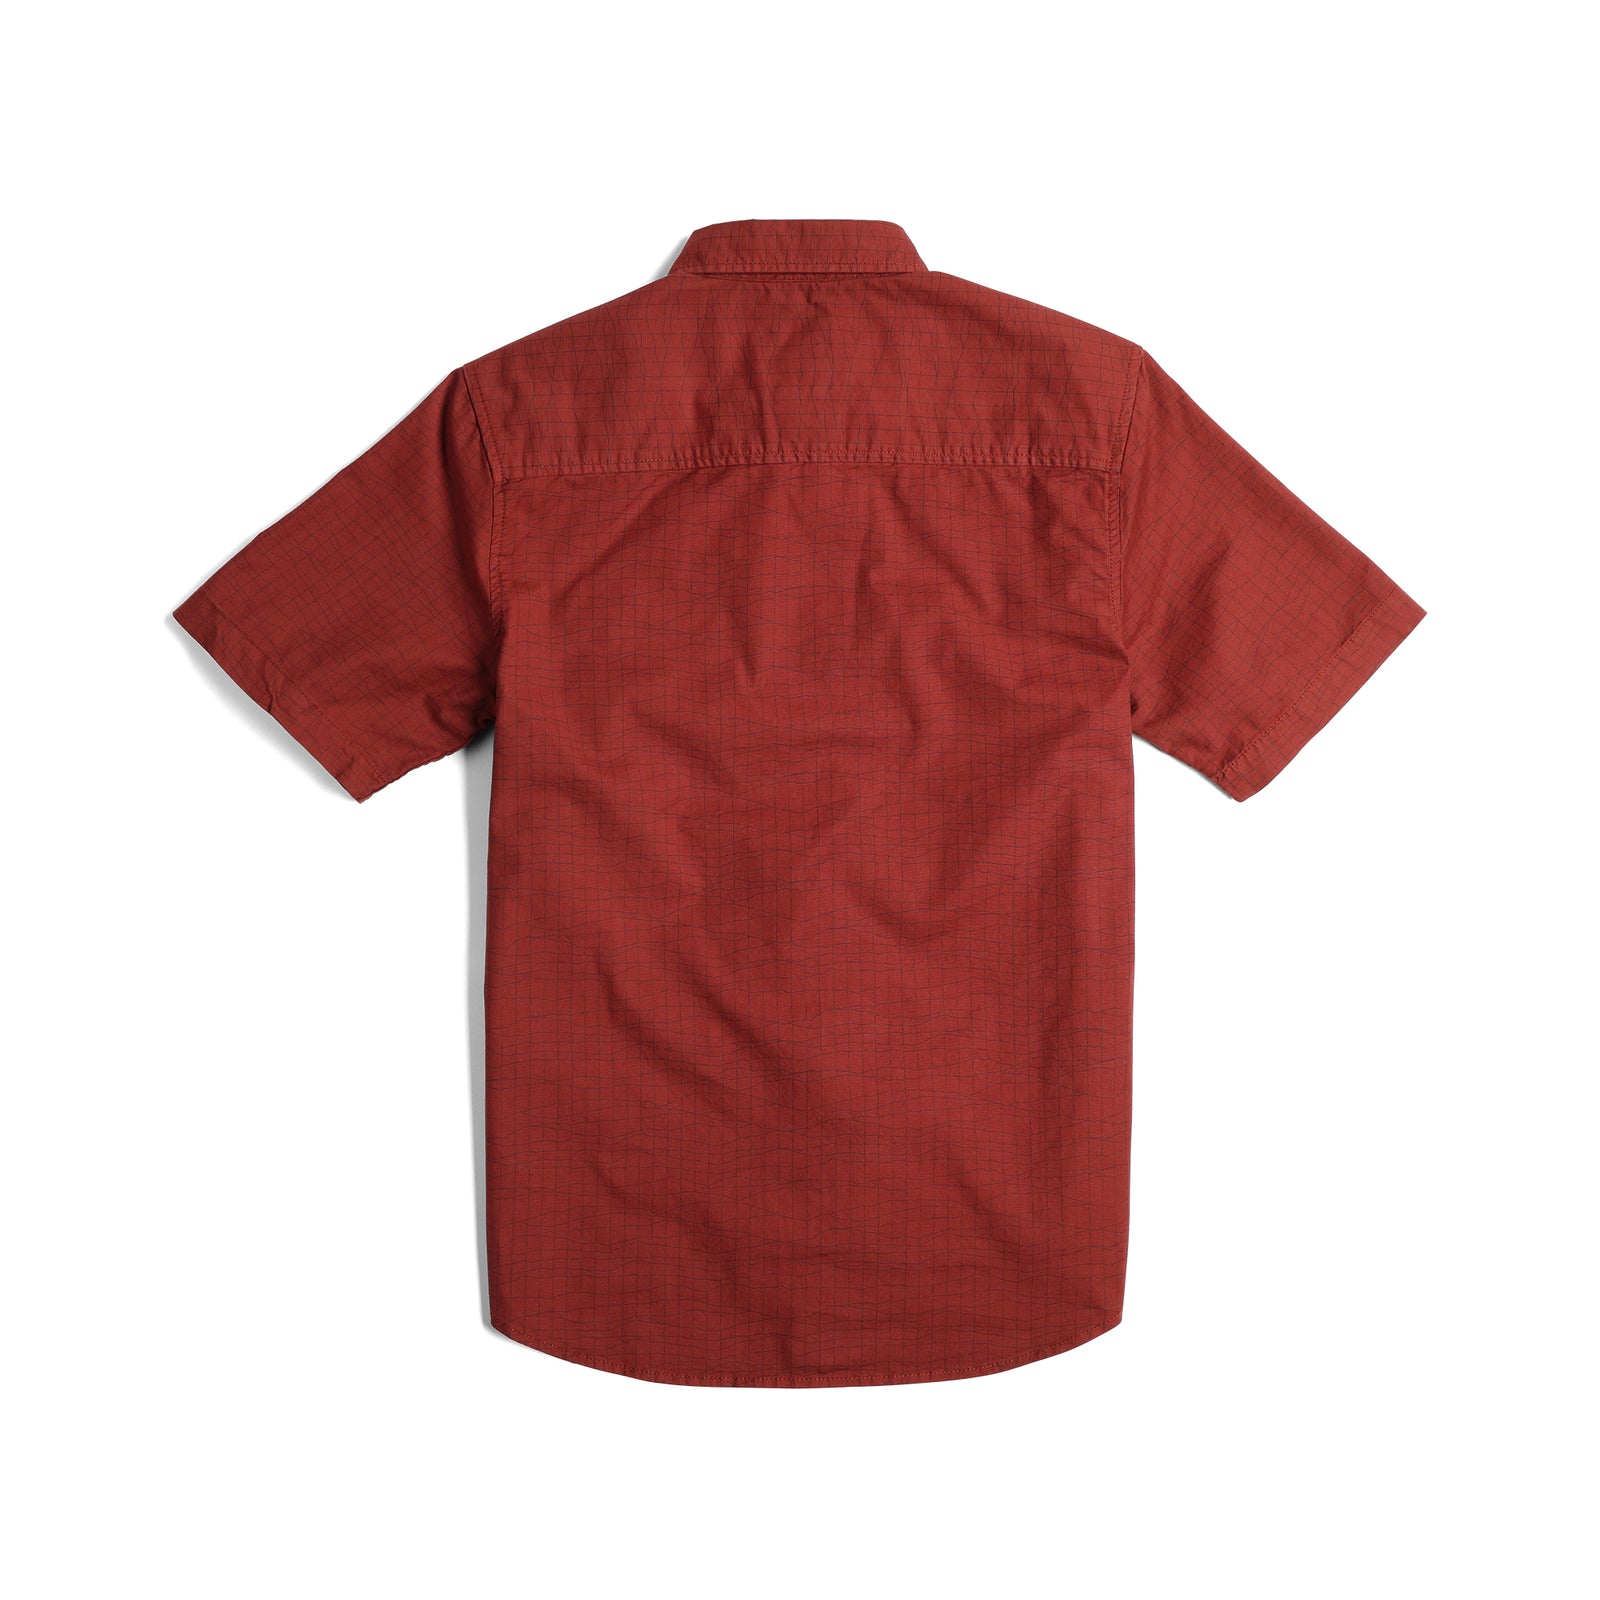 Back View of Topo Designs Dirt Desert Shirt Ss - Men's in "Fire Brick Terrain"